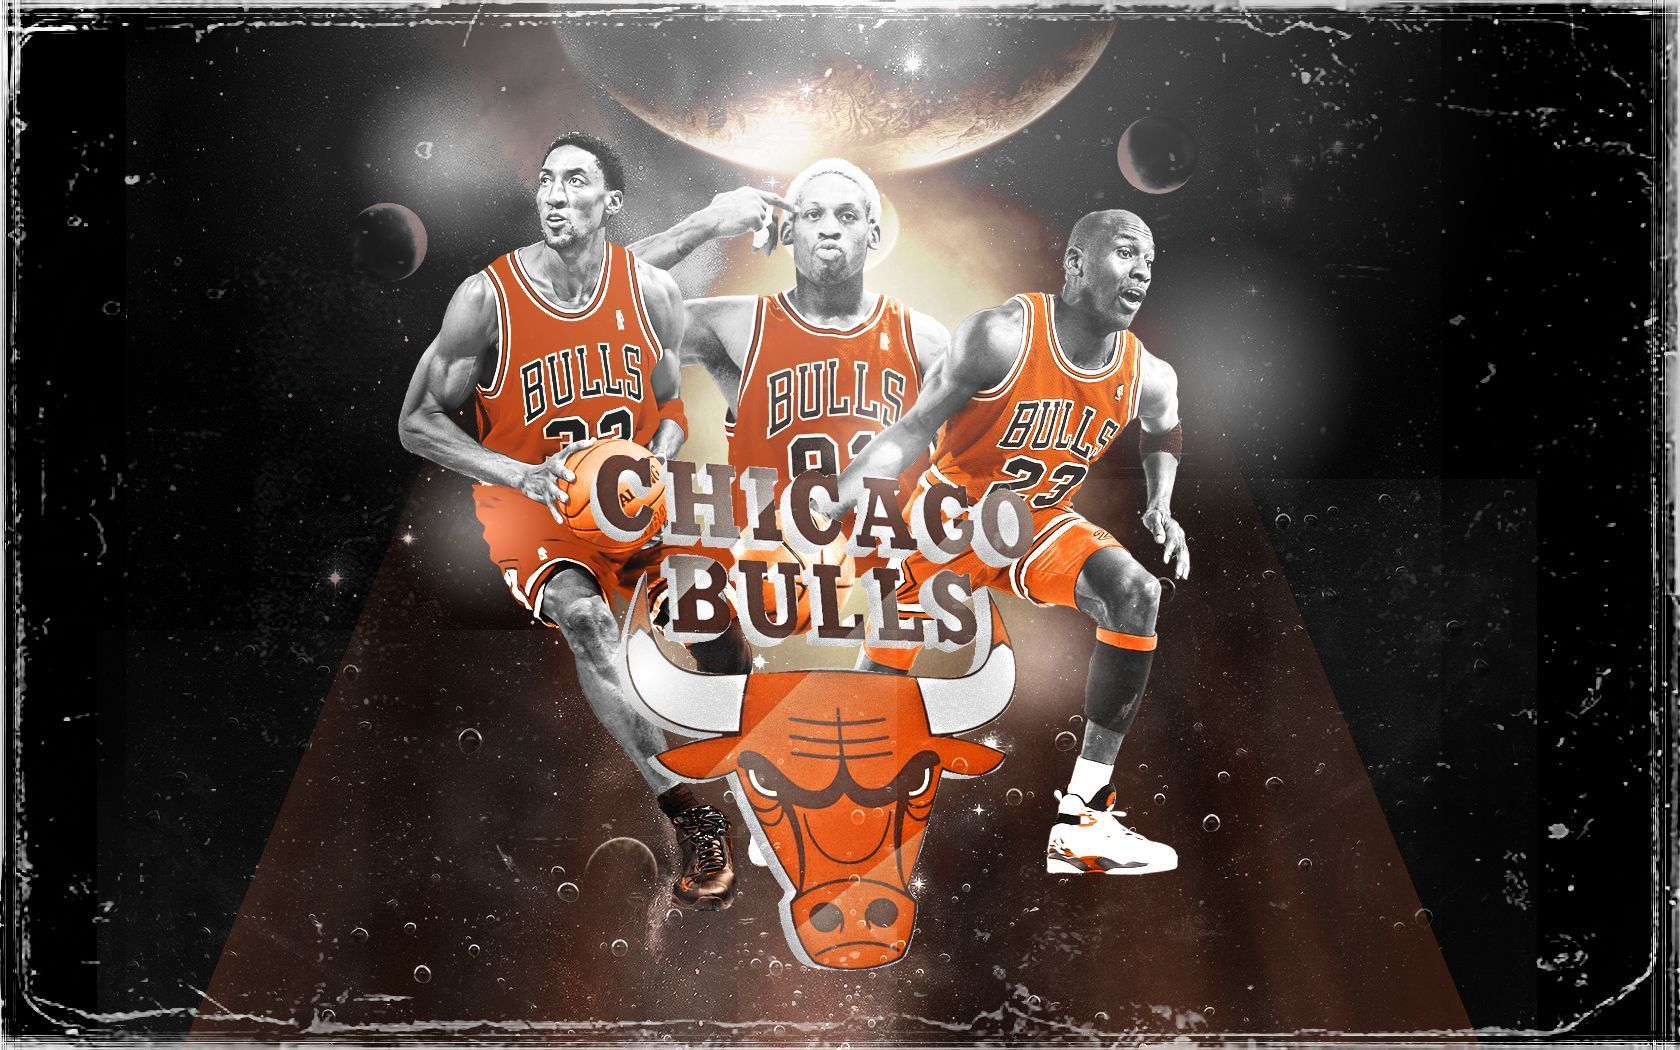 Chicago Bulls Wallpaper by Piterskis on DeviantArt